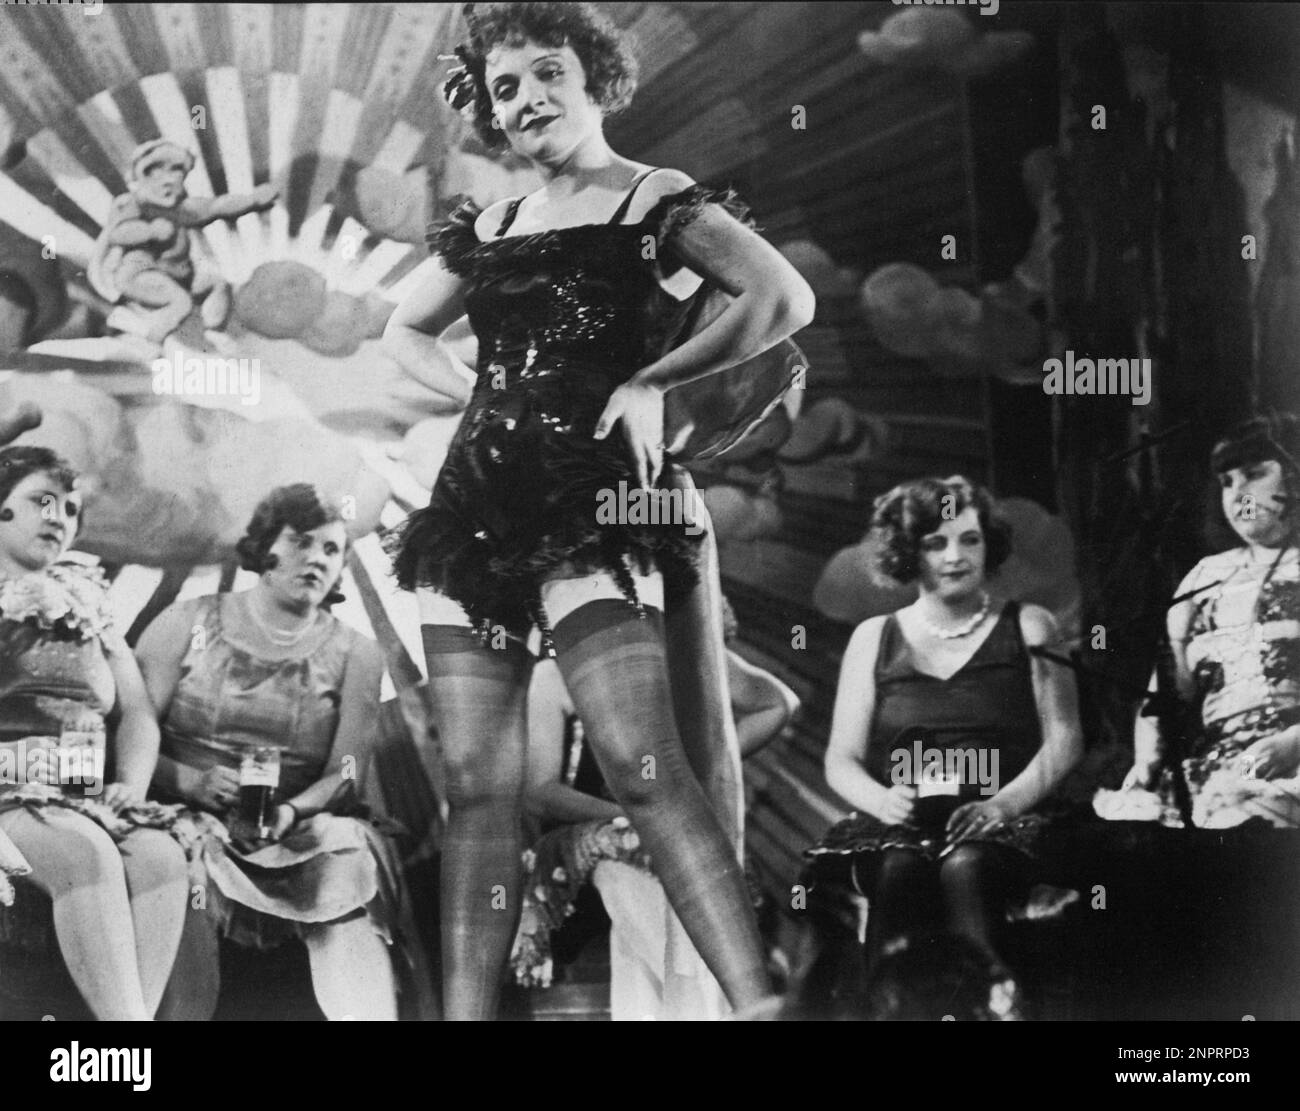 1930 :The german movie actress  MARLENE DIETRICH is Lola - Lola in THE BLUE ANGEL ( Der Blaue Engel - L' Angelo azzurro ) by JOSEF von STERNBERG  - FILM - CINEMA - cabaret - tabarin - leggy pose - gambe - legs - guepiére - calze di seta nera - giarrettiera - giarrettiere - black silk stockings - ballerina - dancer - singer - cantante  ----  Archivio GBB Stock Photo